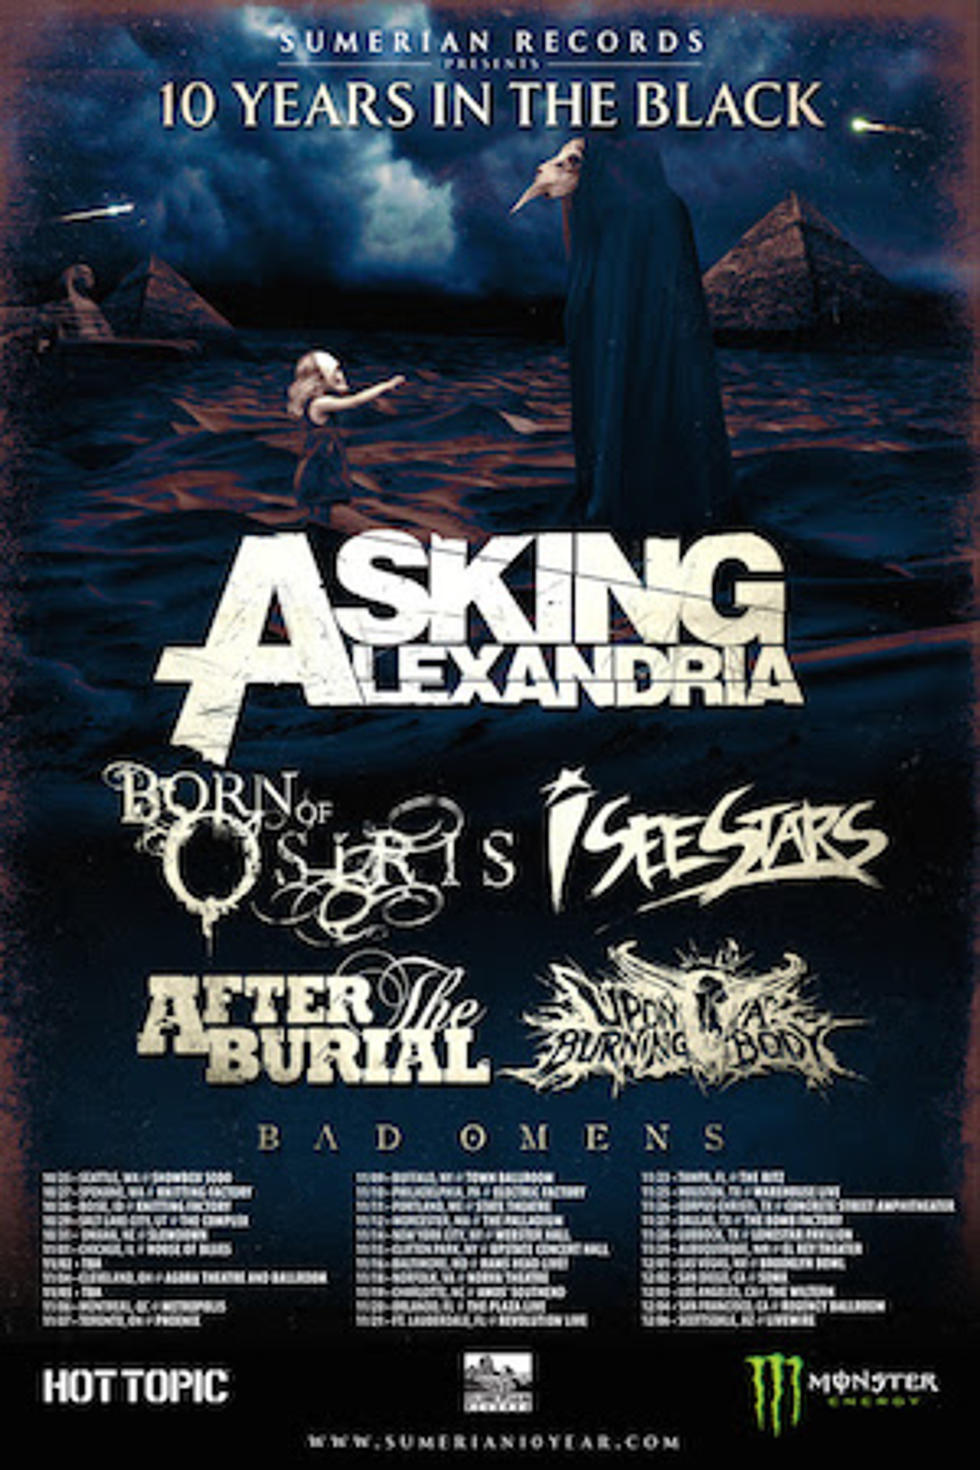 Asking Alexandria + Born of Osiris Lead &#8217;10 Years in the Black&#8217; Sumerian Records 10th Anniversary Tour